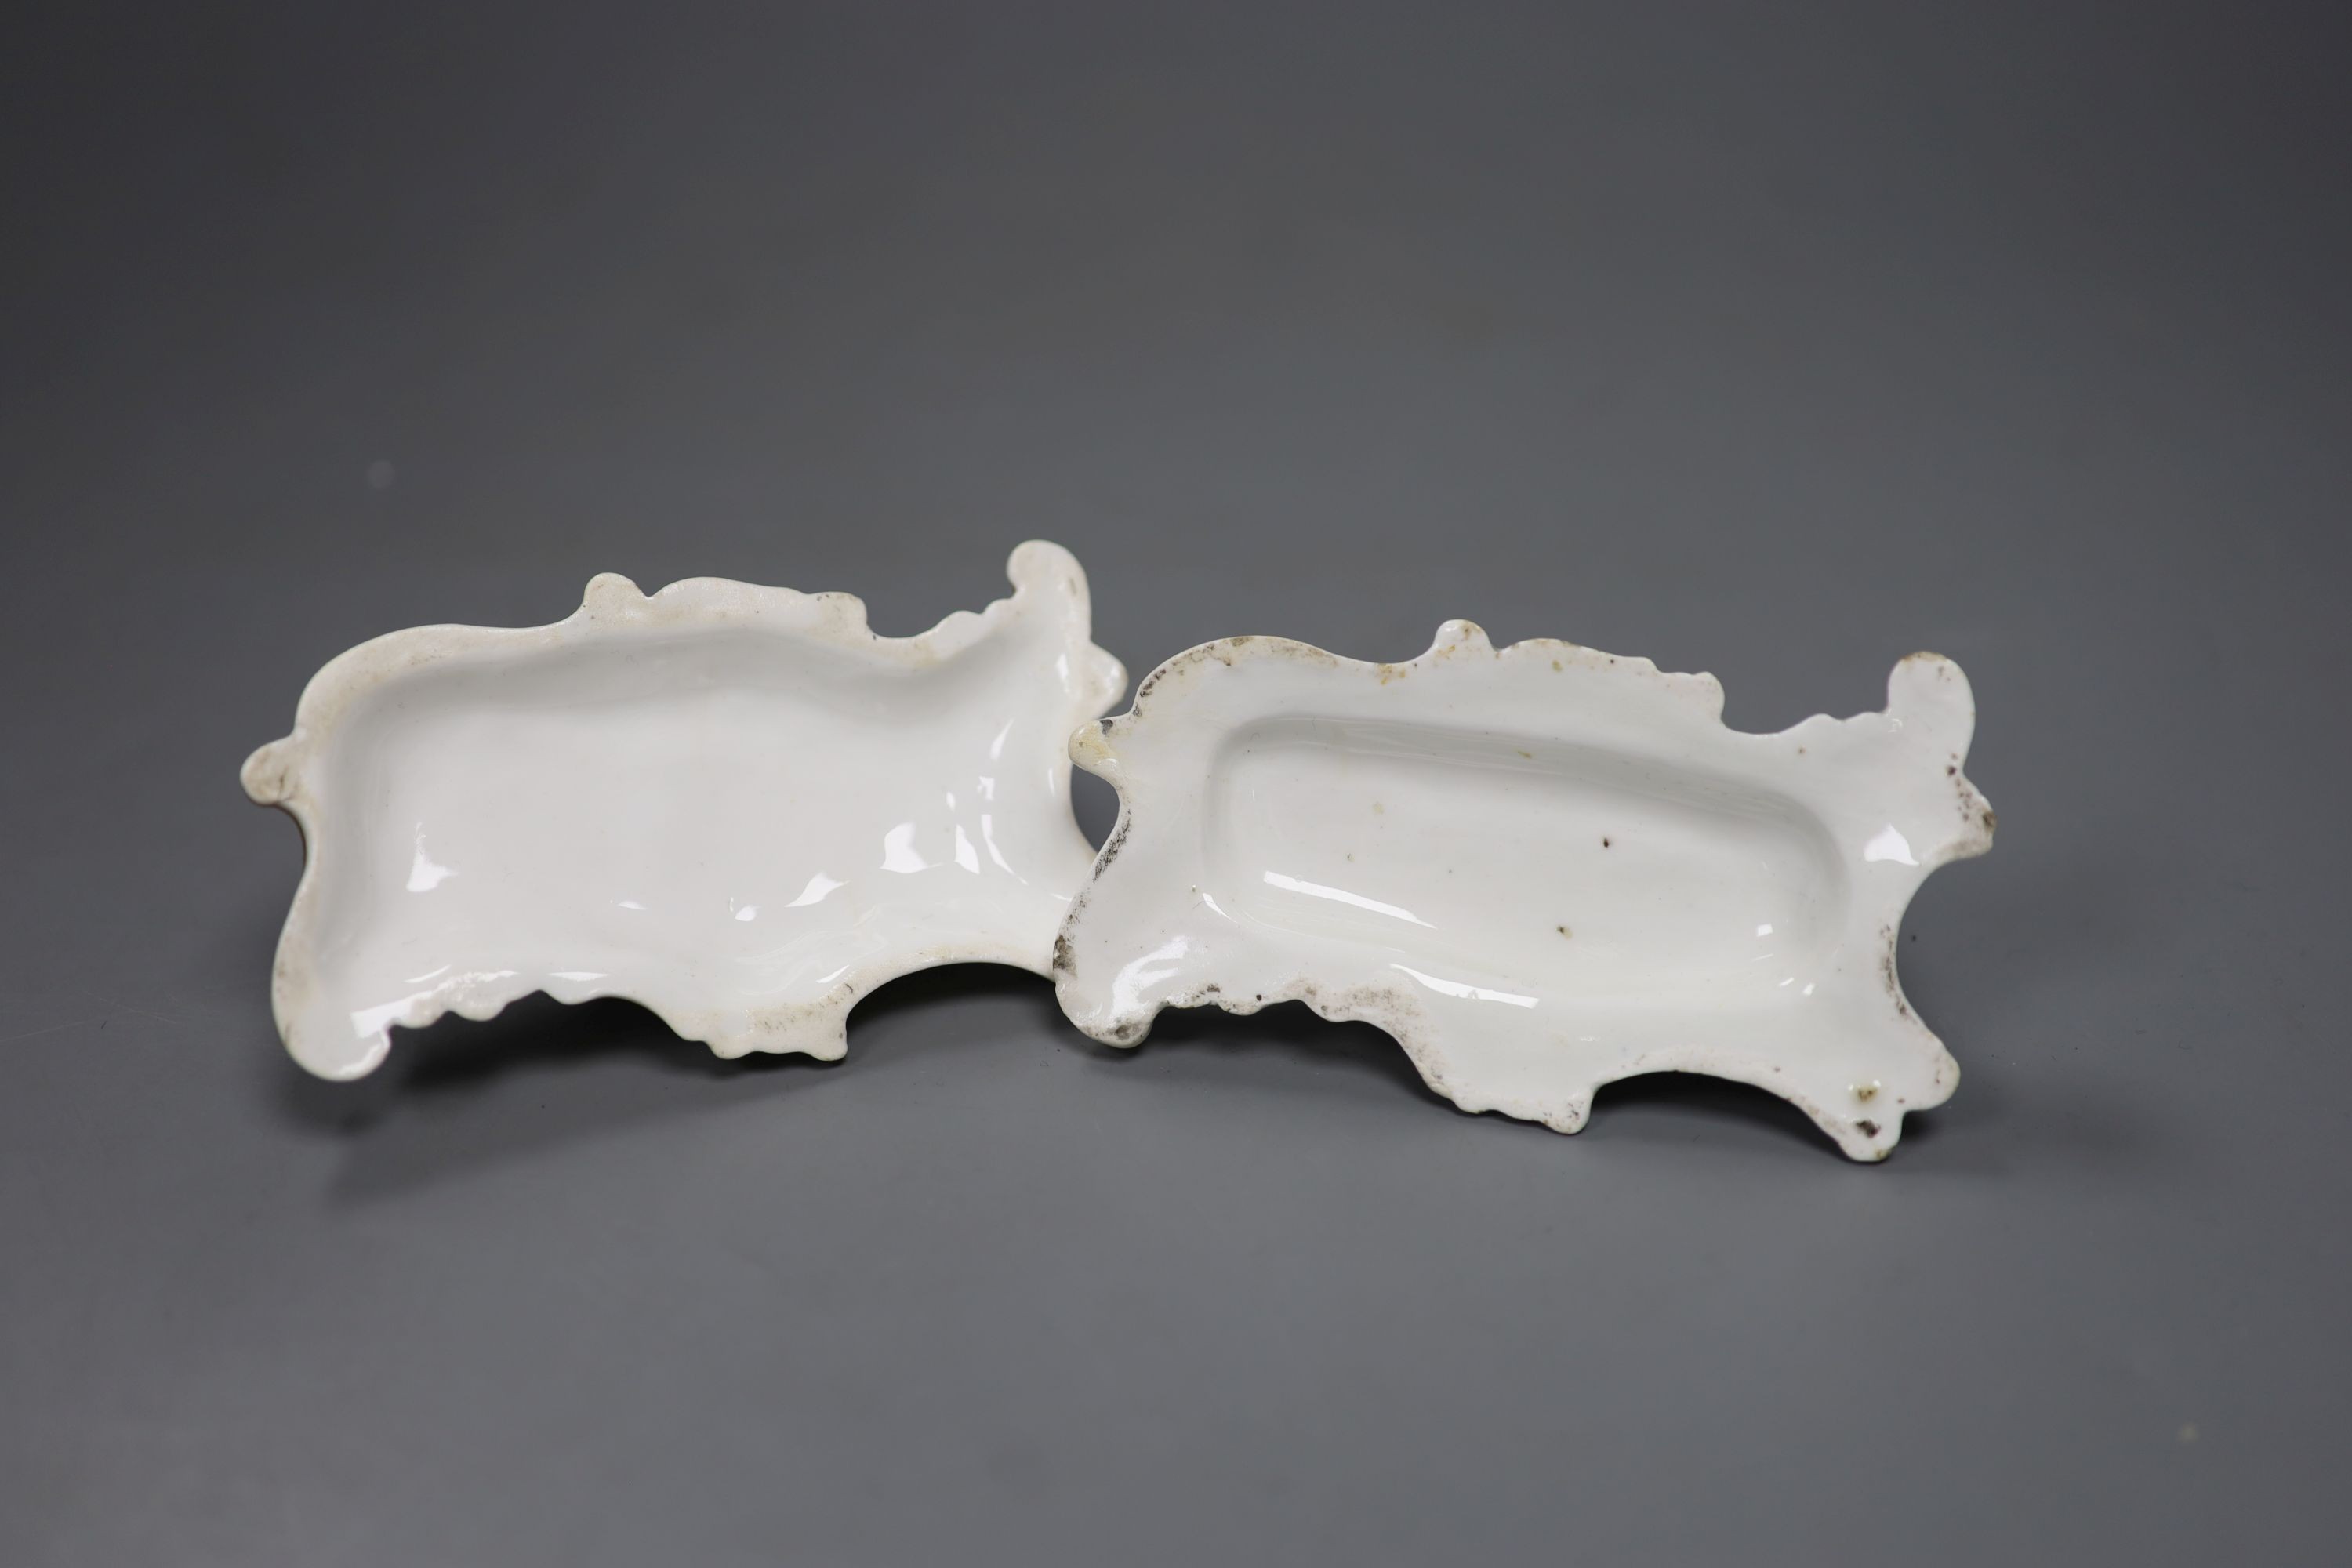 Two similar Staffordshire porcelain models of recumbent setters, c.1830-50, 12cm long